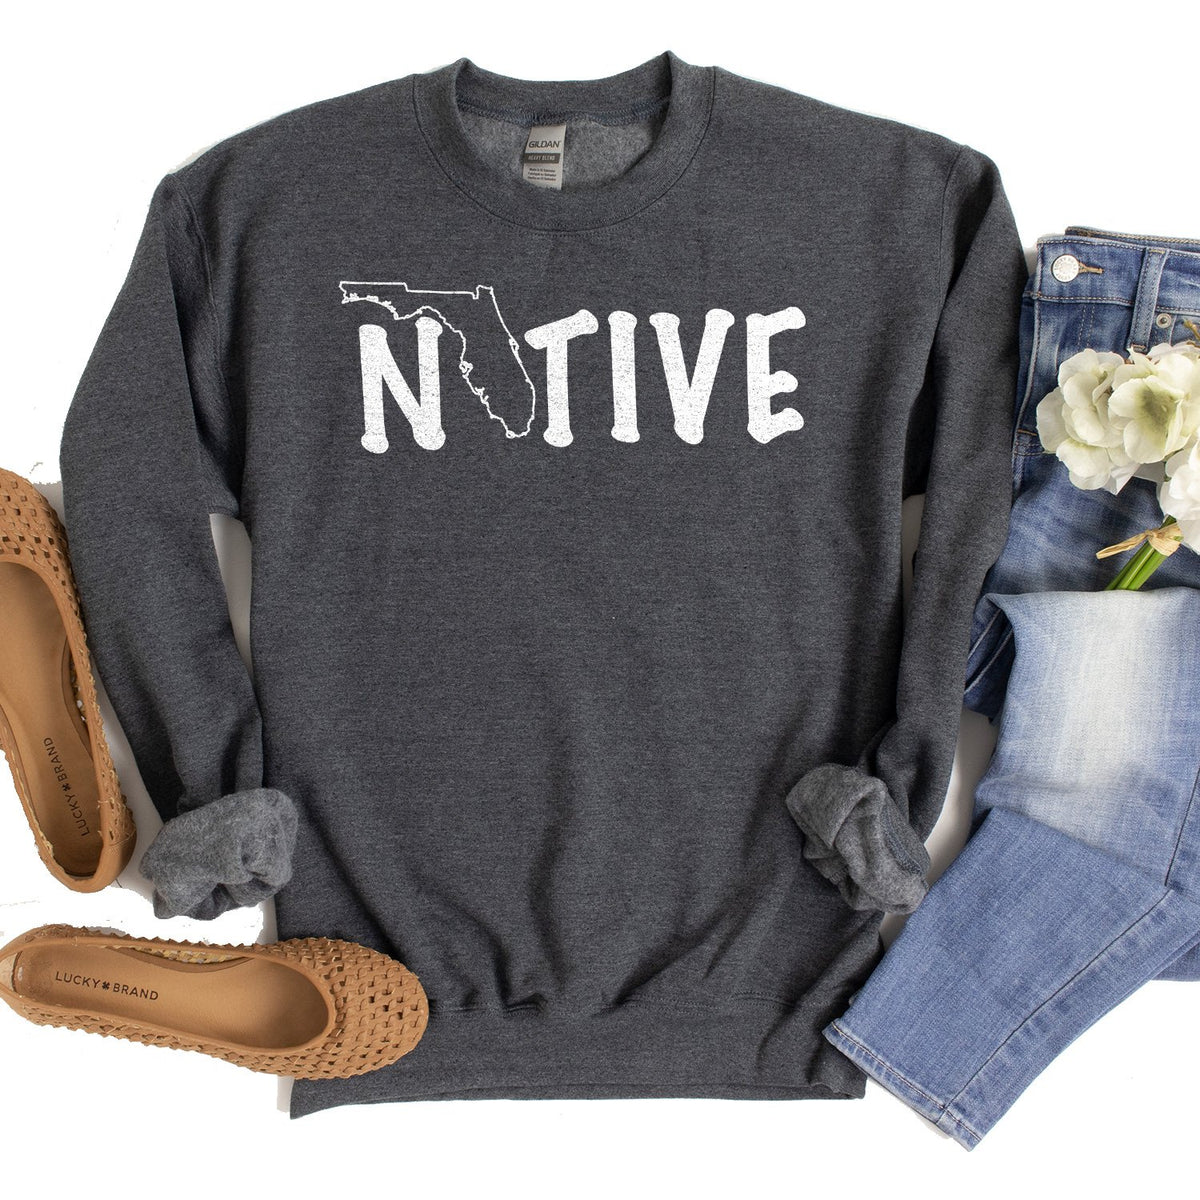 FL Native - Long Sleeve Heavy Crewneck Sweatshirt